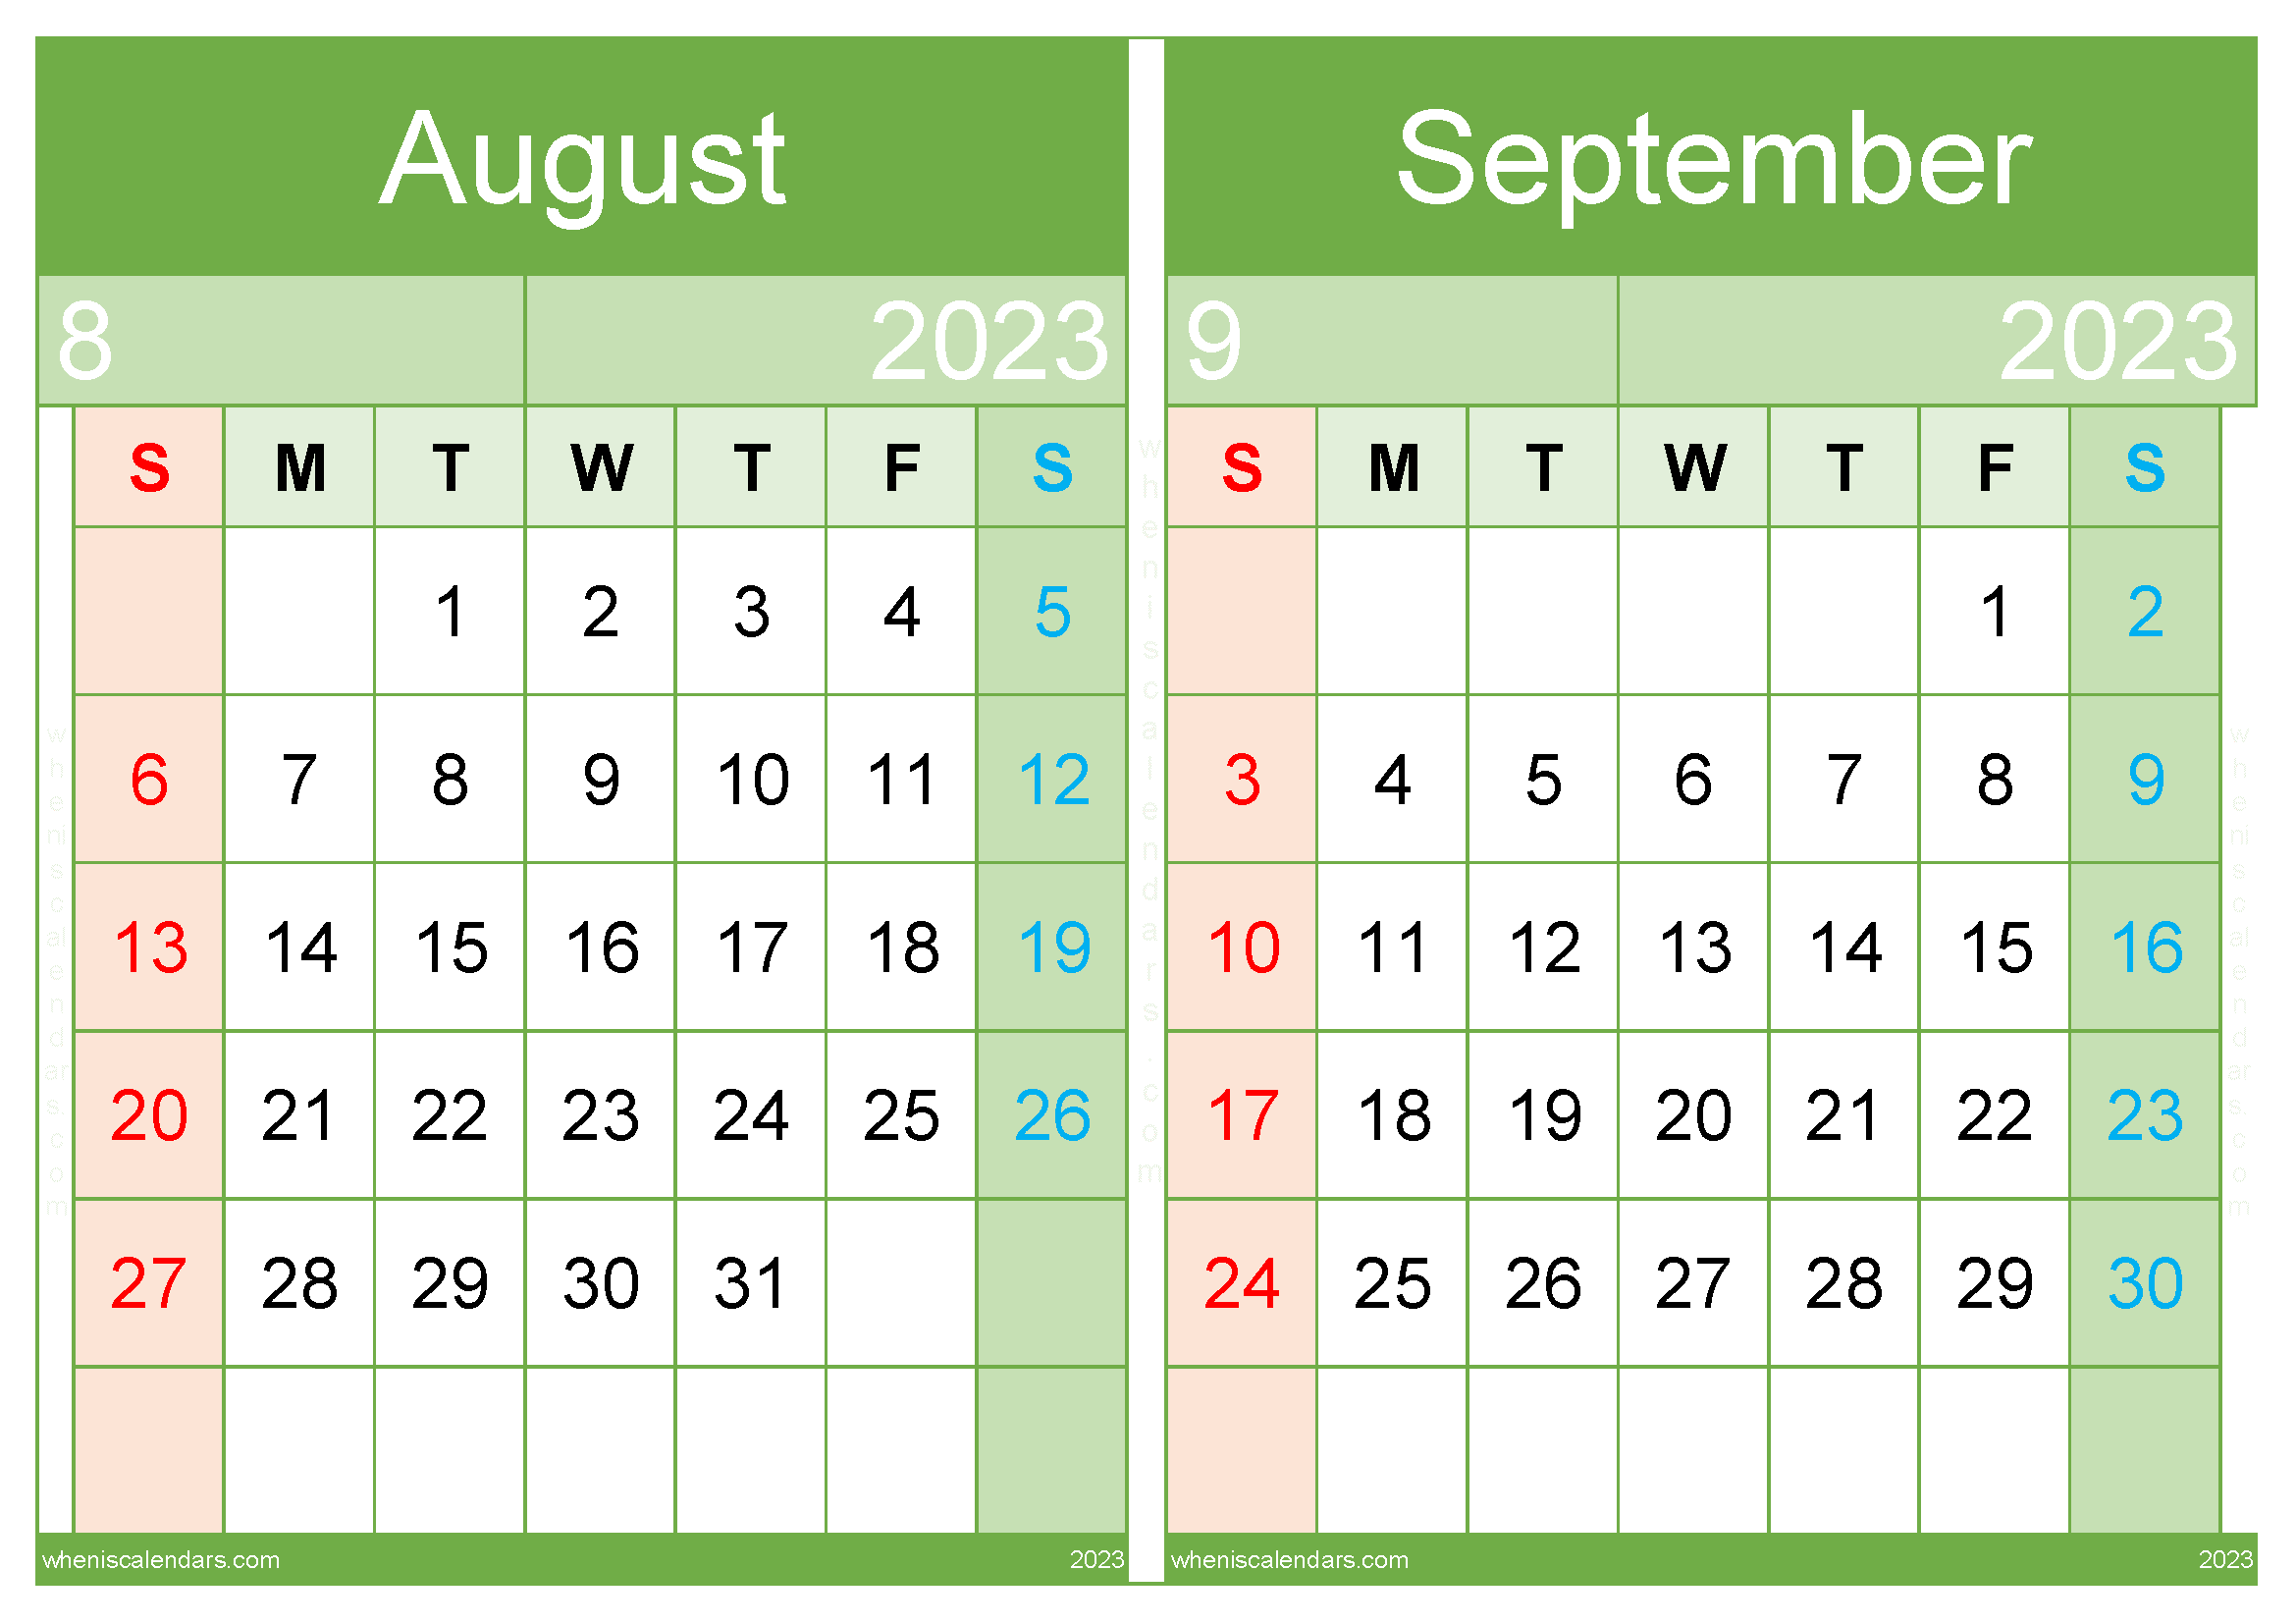 Calendar August and September 2023 Template (AS2318)